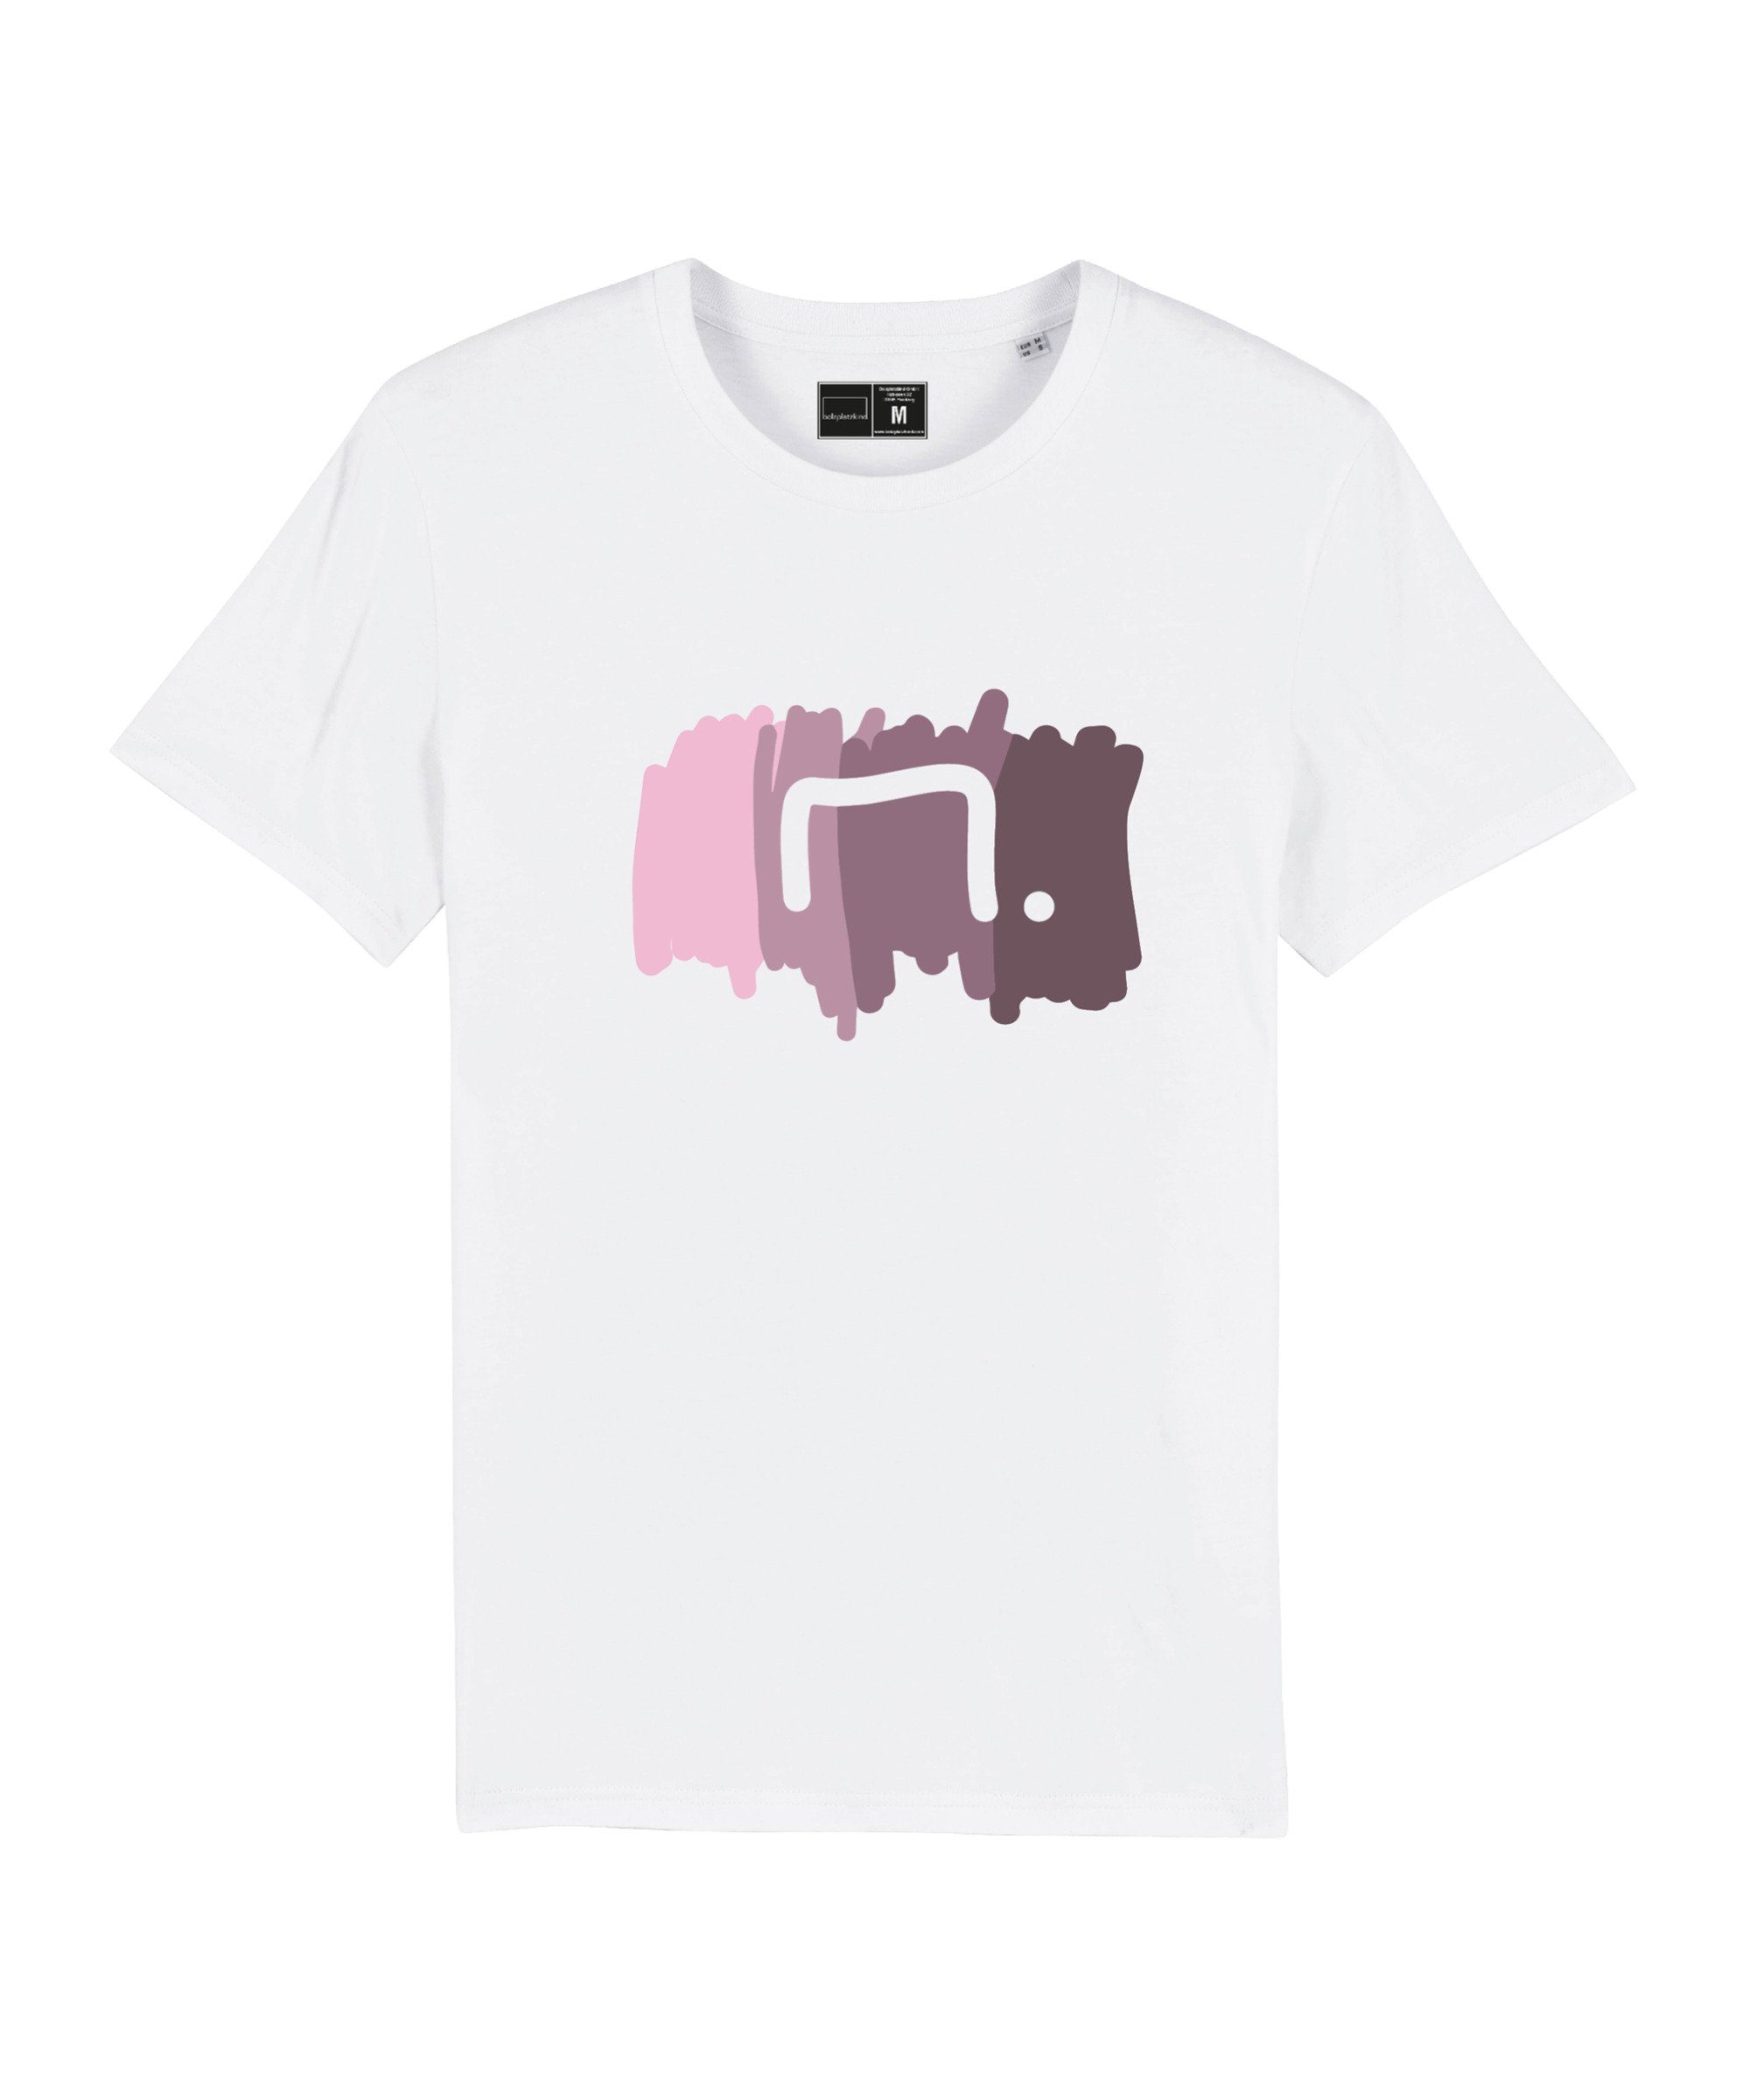 Bolzplatzkind T-Shirt "Free" T-Shirt Nachhaltiges Produkt weissrosa | T-Shirts